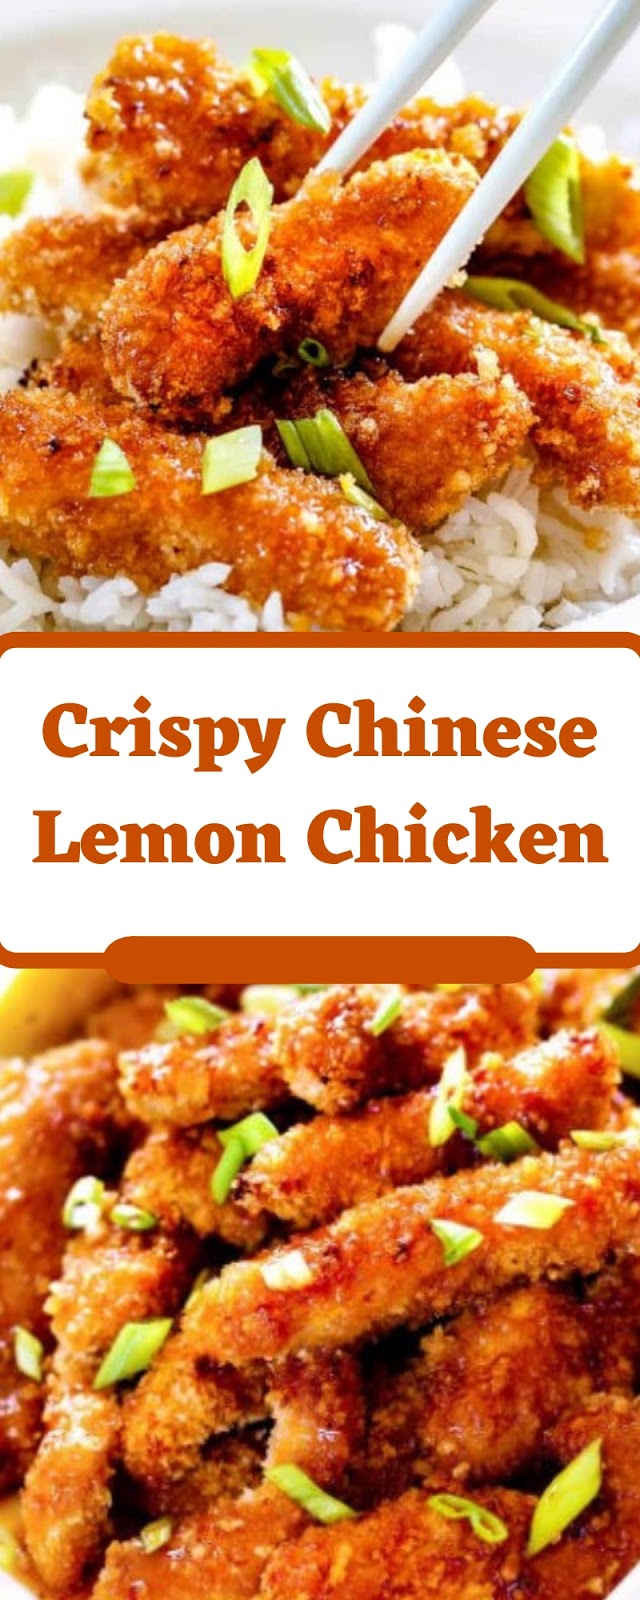 Crispy Chinese Lemon Chicken